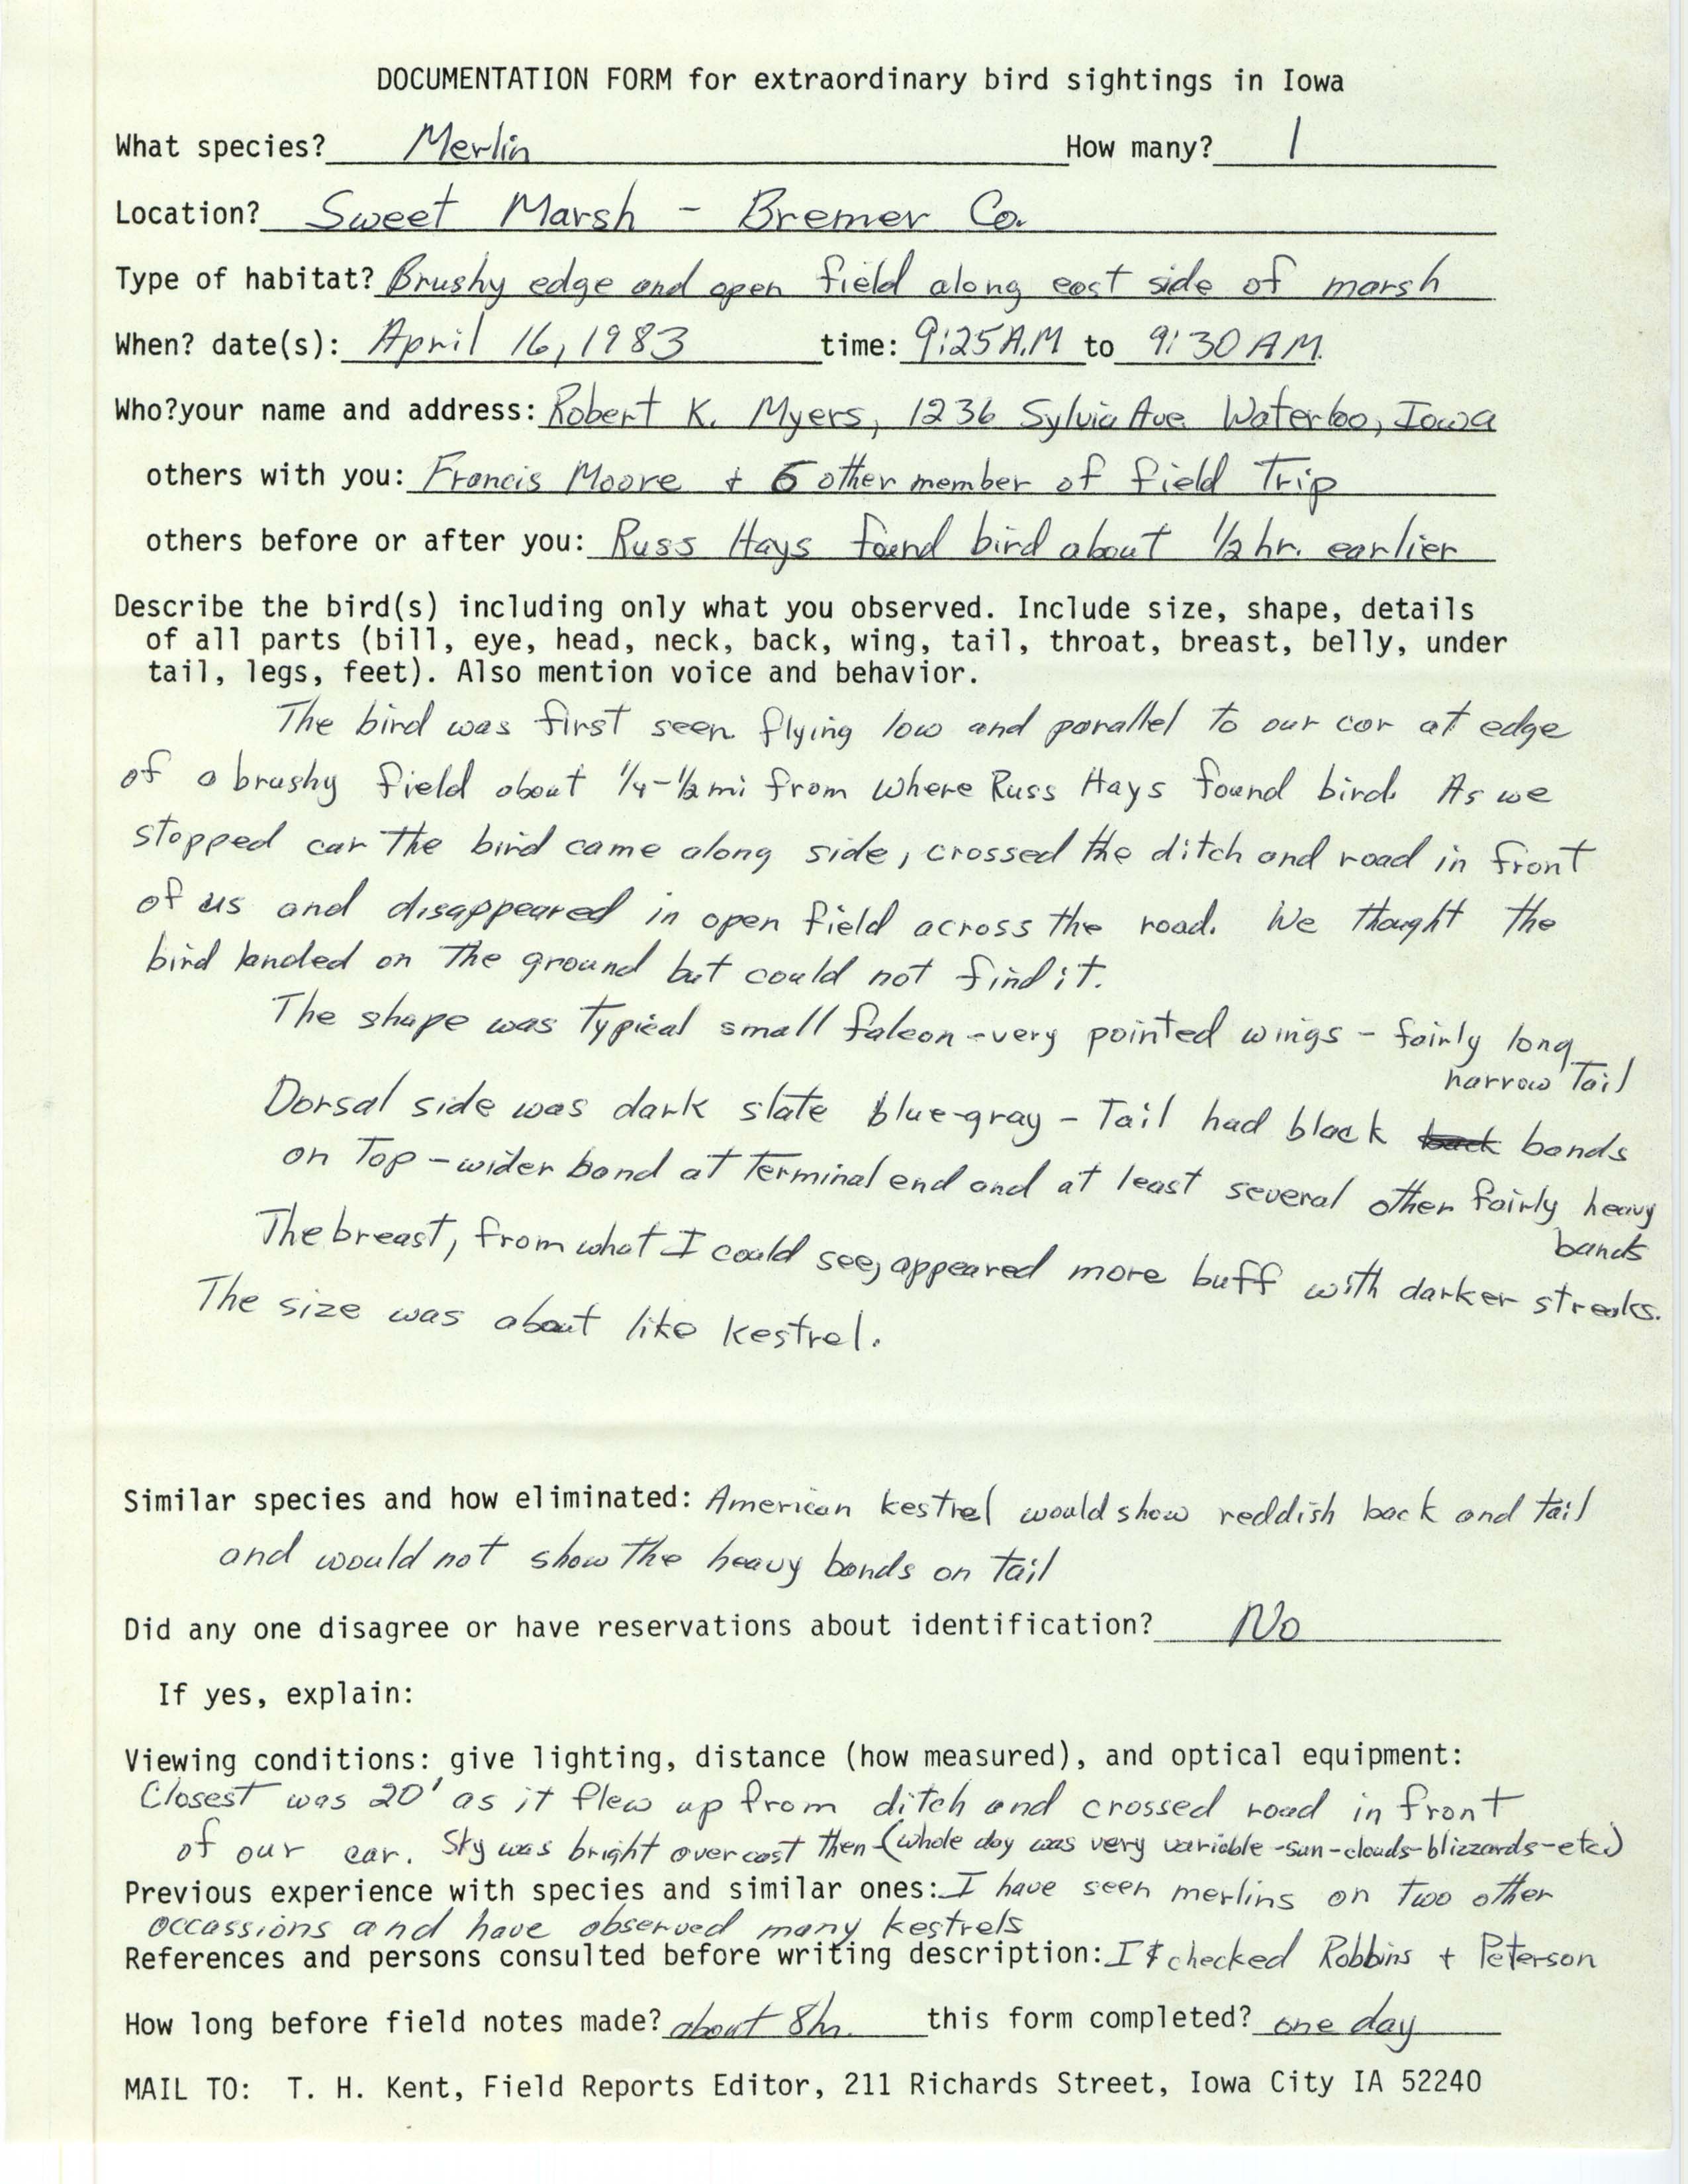 Rare bird documentation form for Merlin at Sweet Marsh, 1983